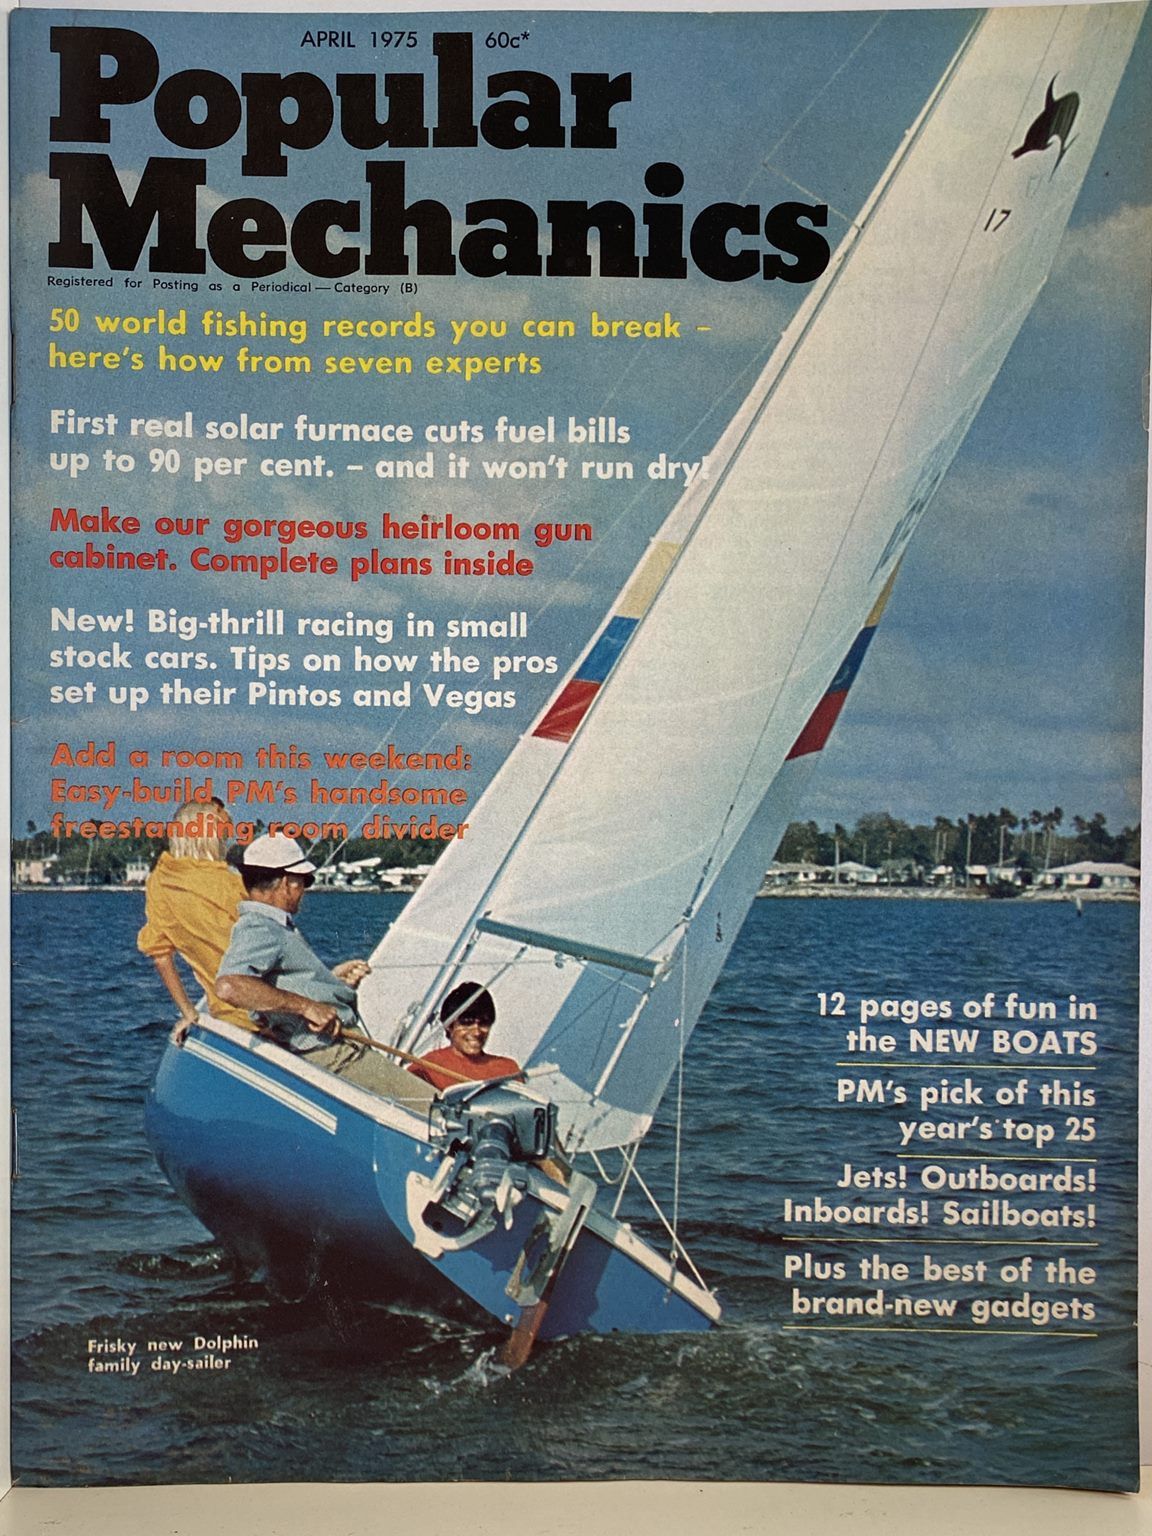 VINTAGE MAGAZINE: Popular Mechanics - Vol. 143, No. 4 - April 1975